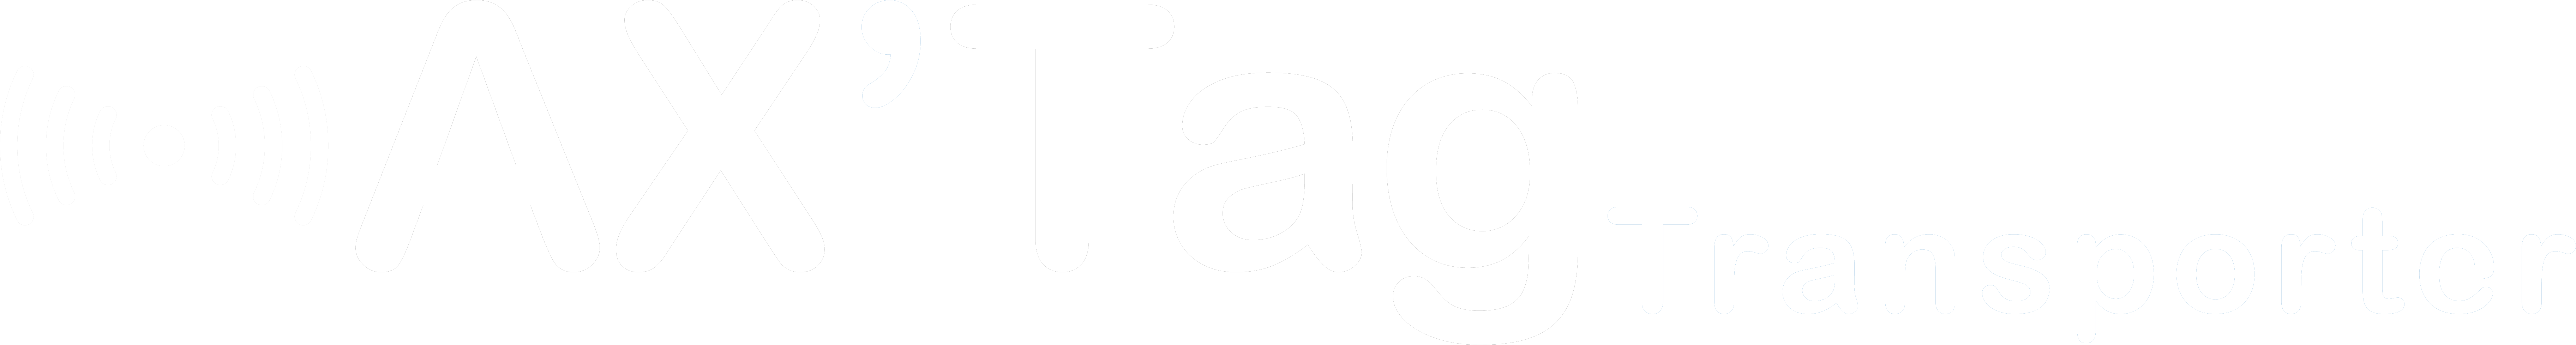 Logo Axtag Transporter Png